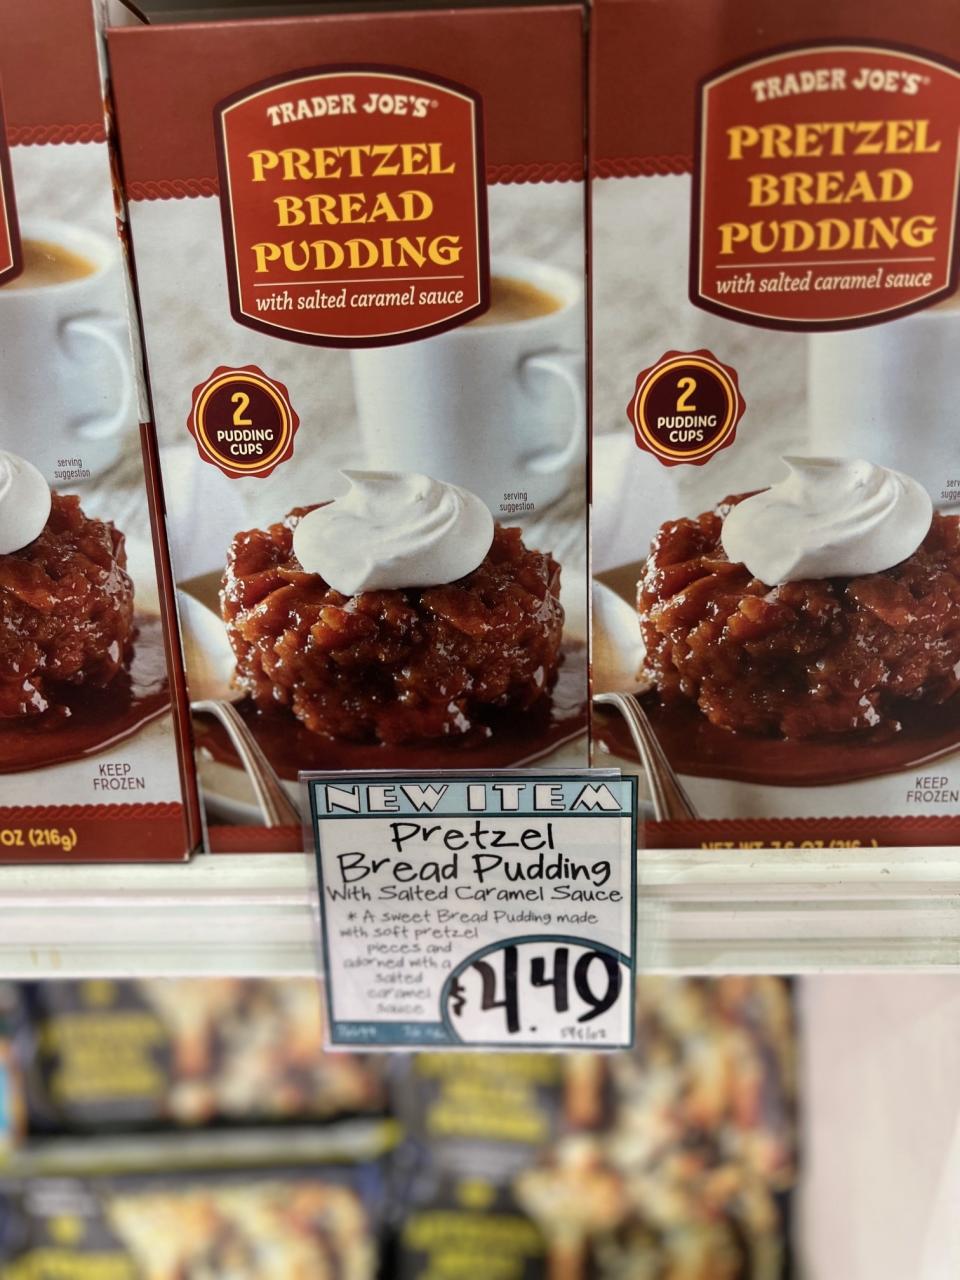 Boxes of Trader Joe's Pretzel Bread Pudding on the store shelf